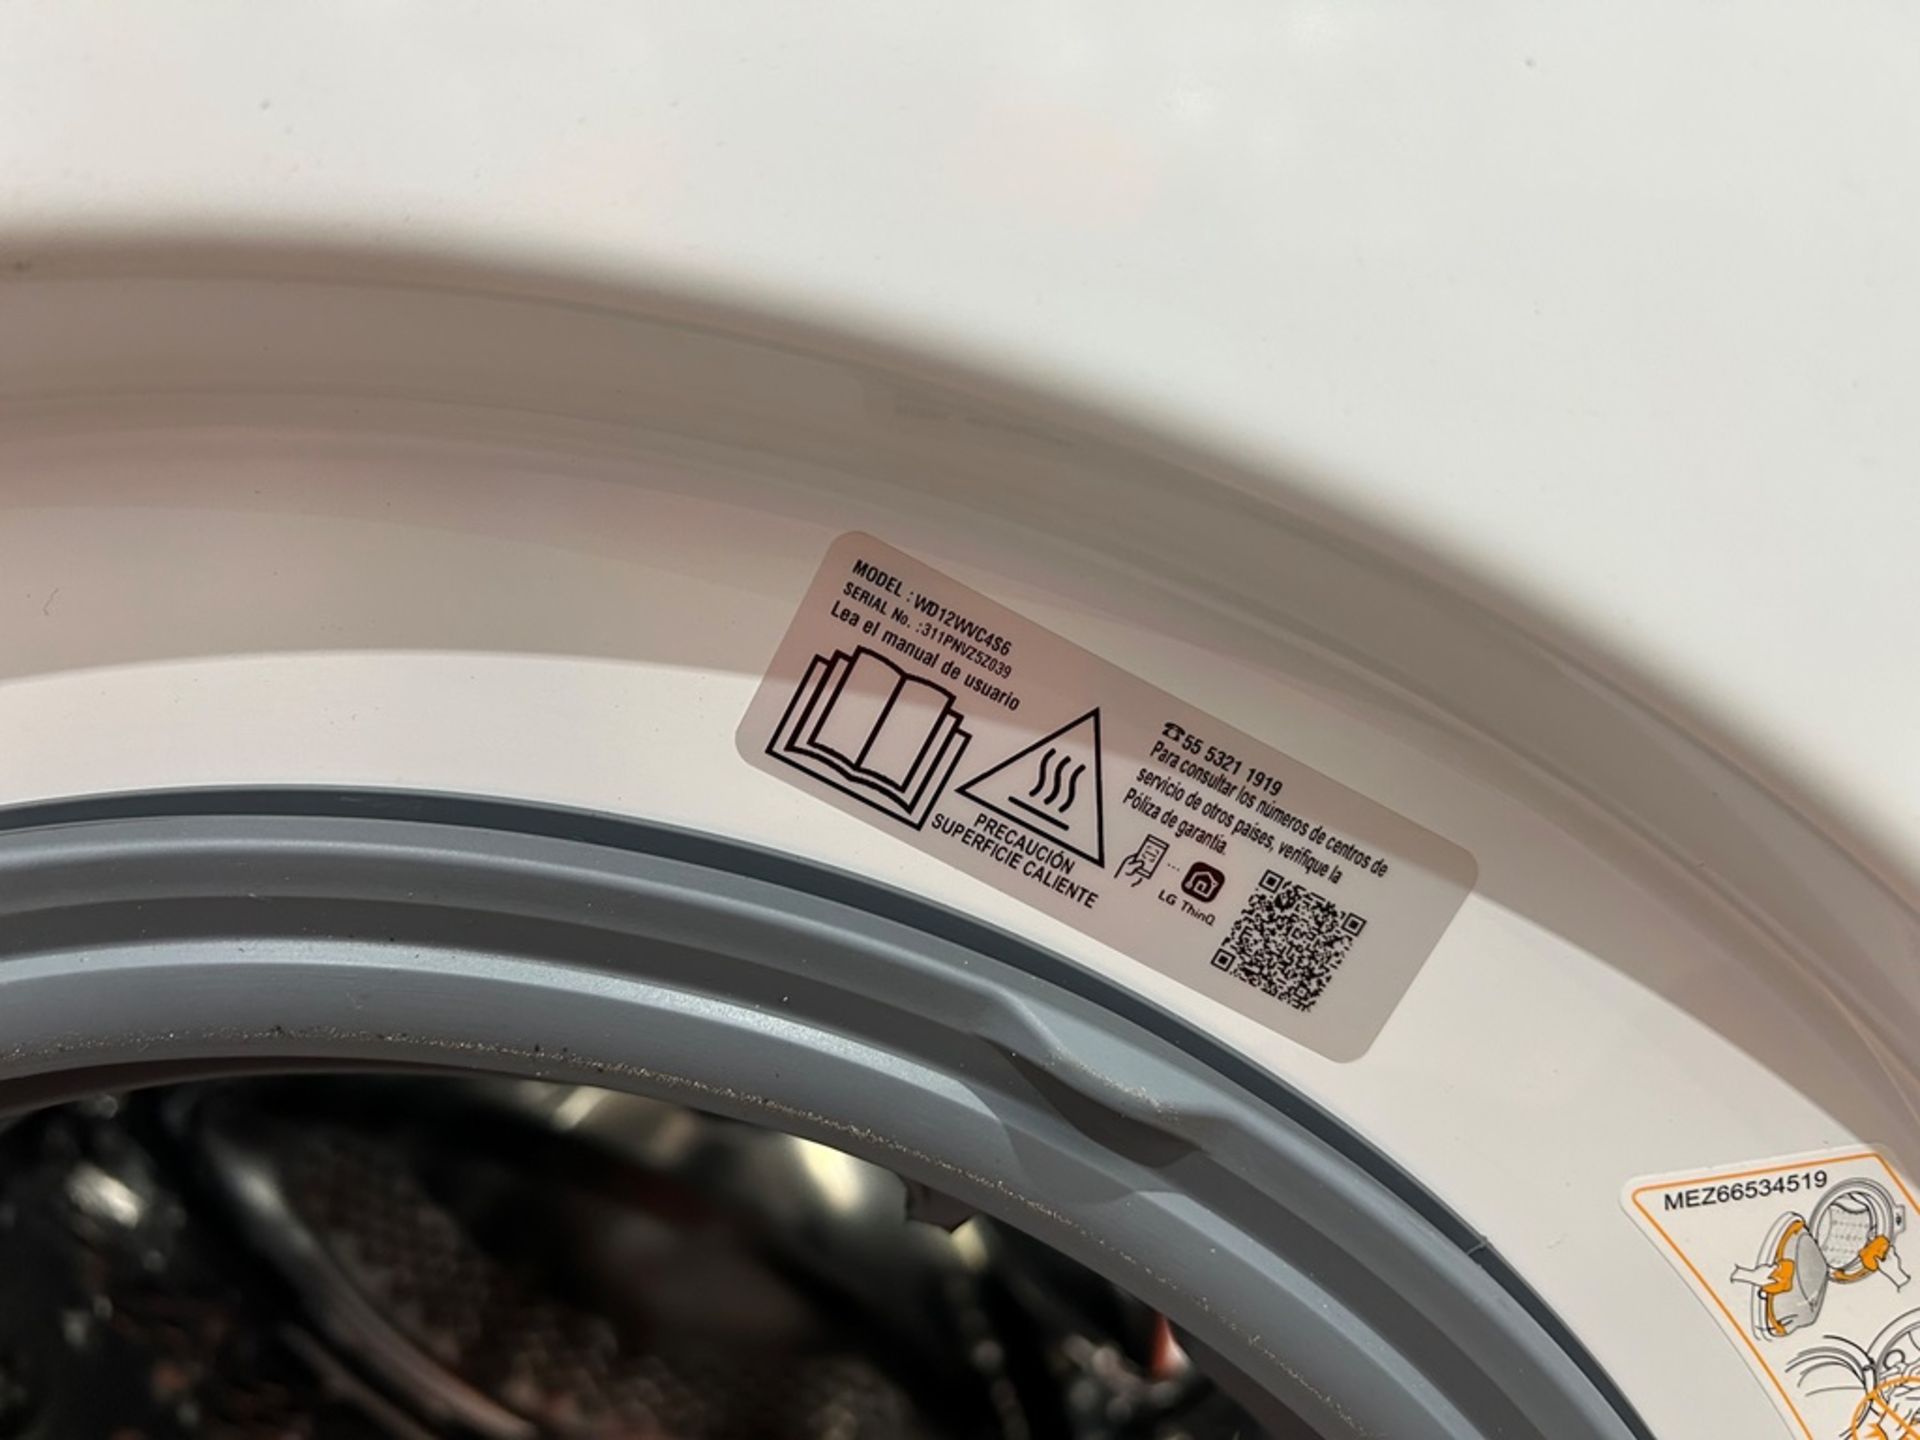 Lote de 2 lavadoras contiene: 1 Lavadora de 17 KG, Marca MIDEA, Modelo M1920901, Serie D00534, Colo - Image 6 of 10